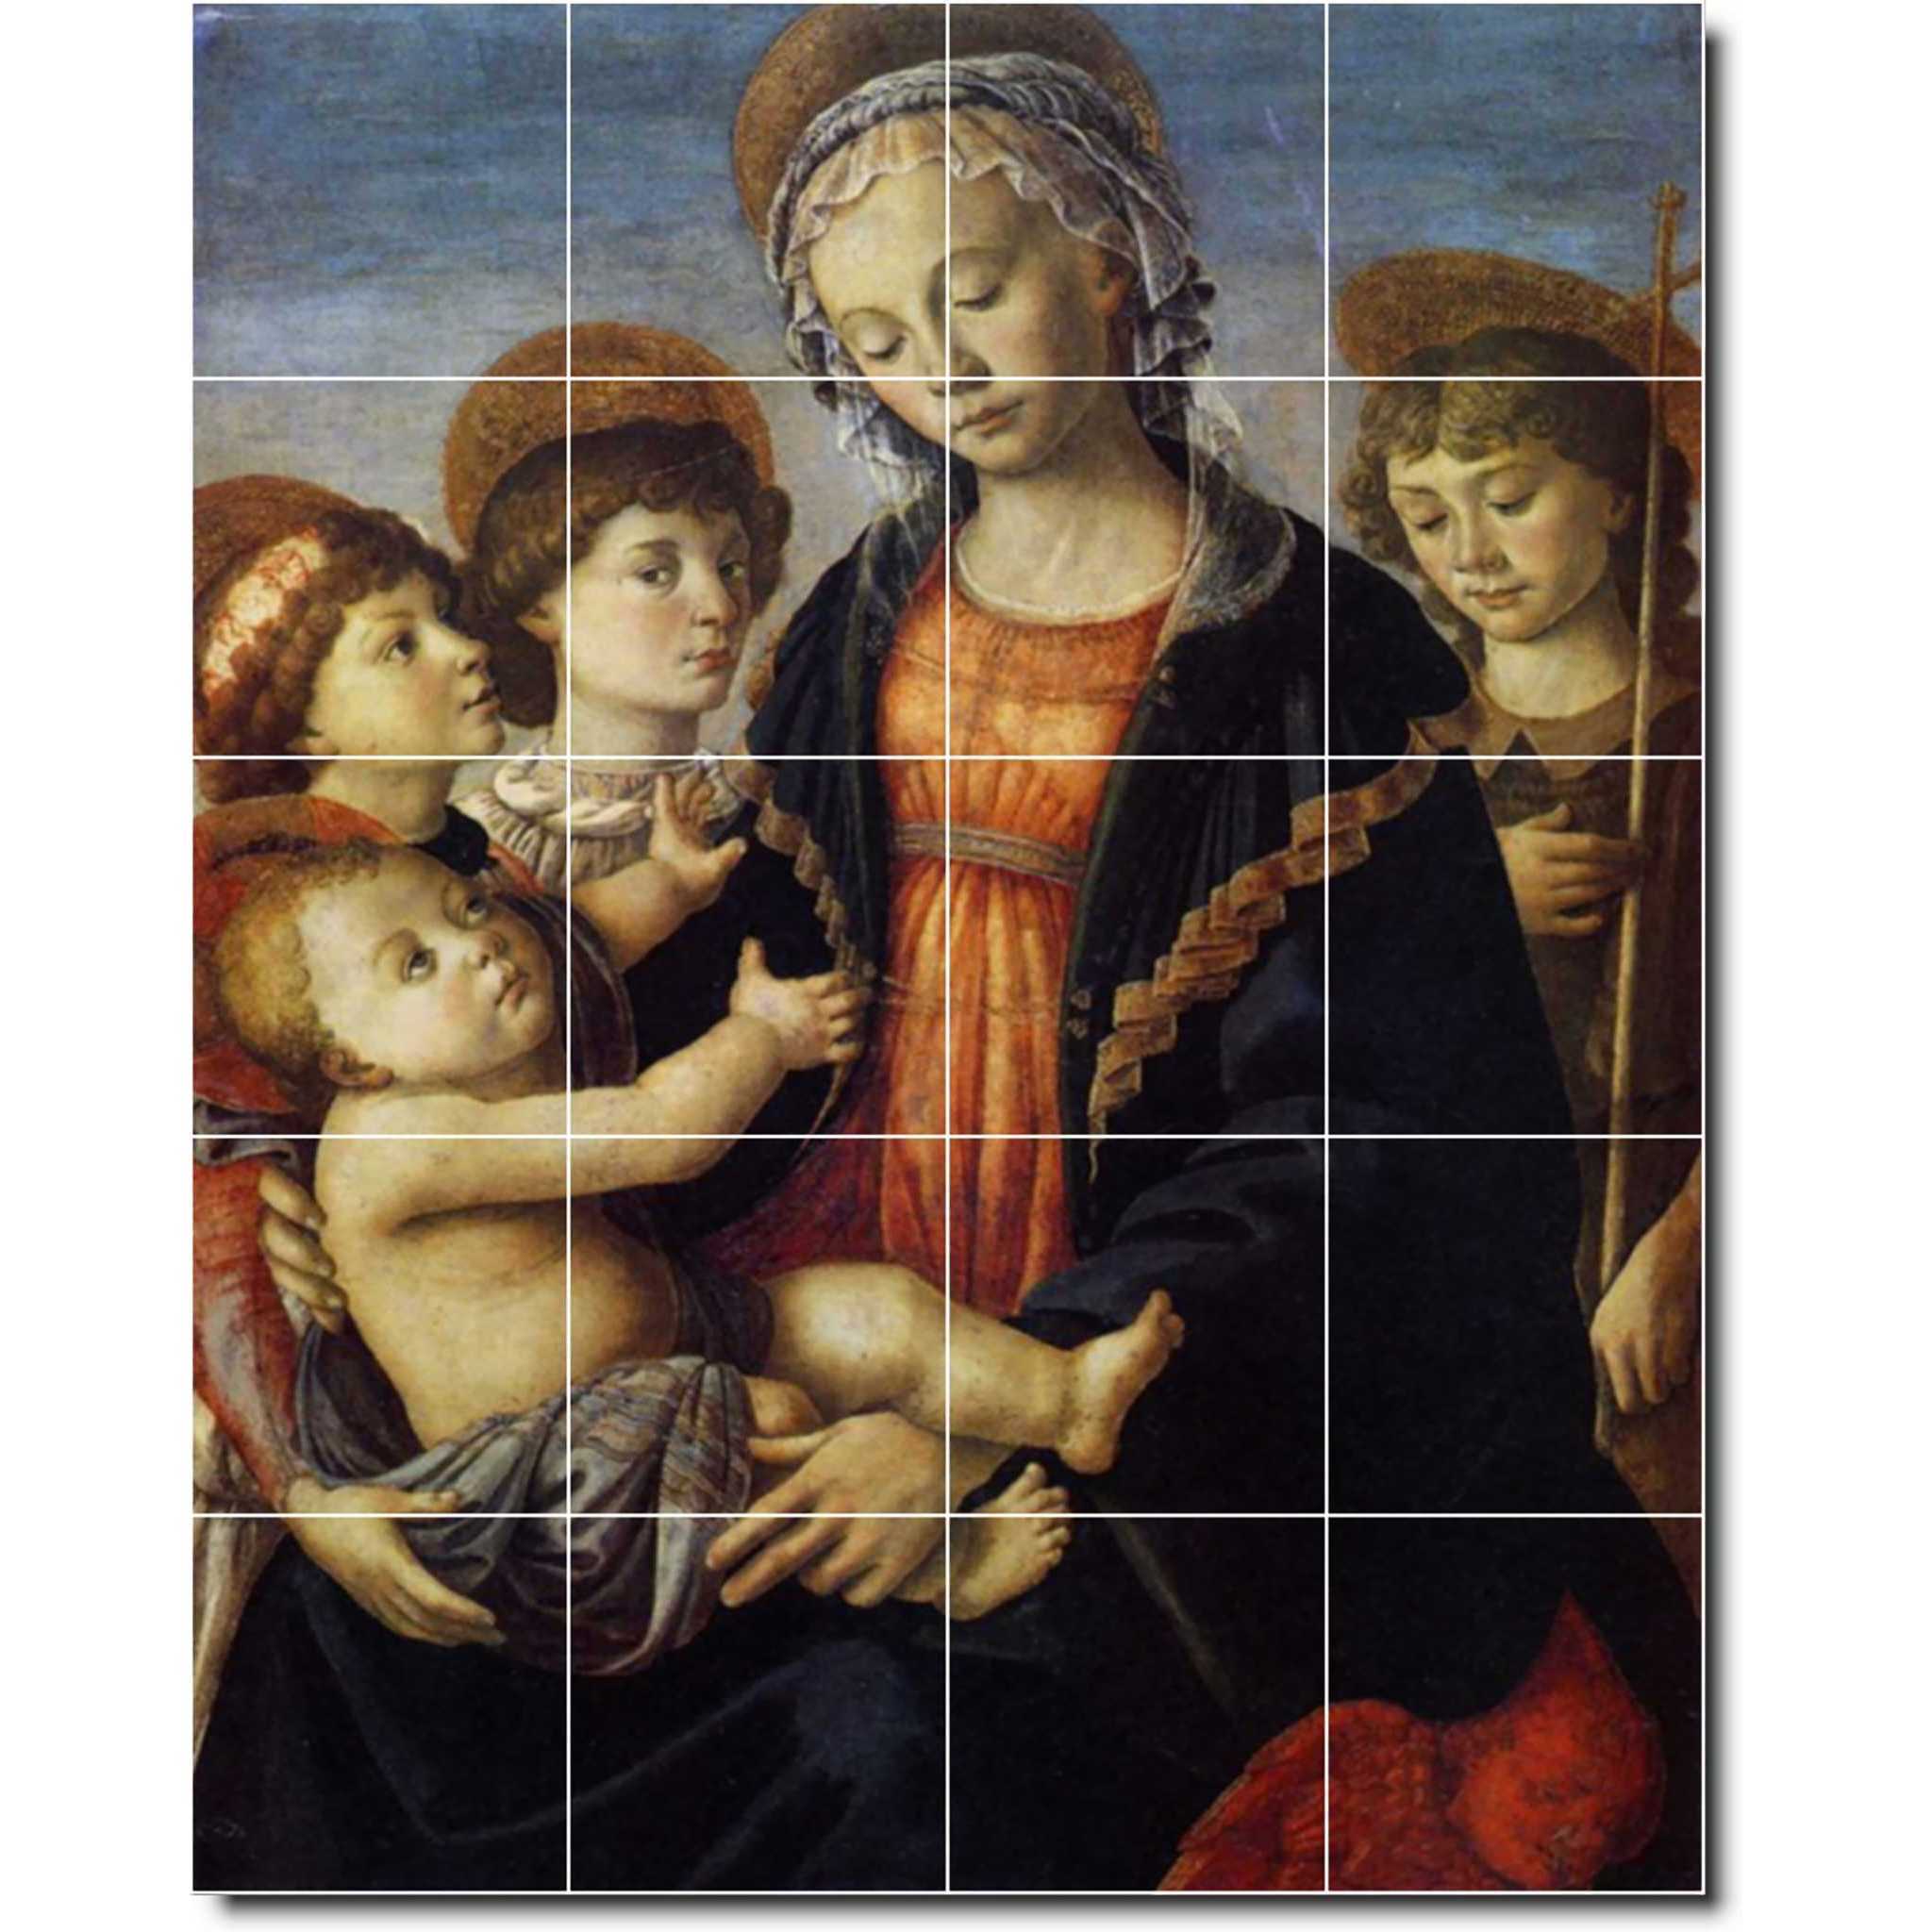 sandro botticelli religious painting ceramic tile mural p00726